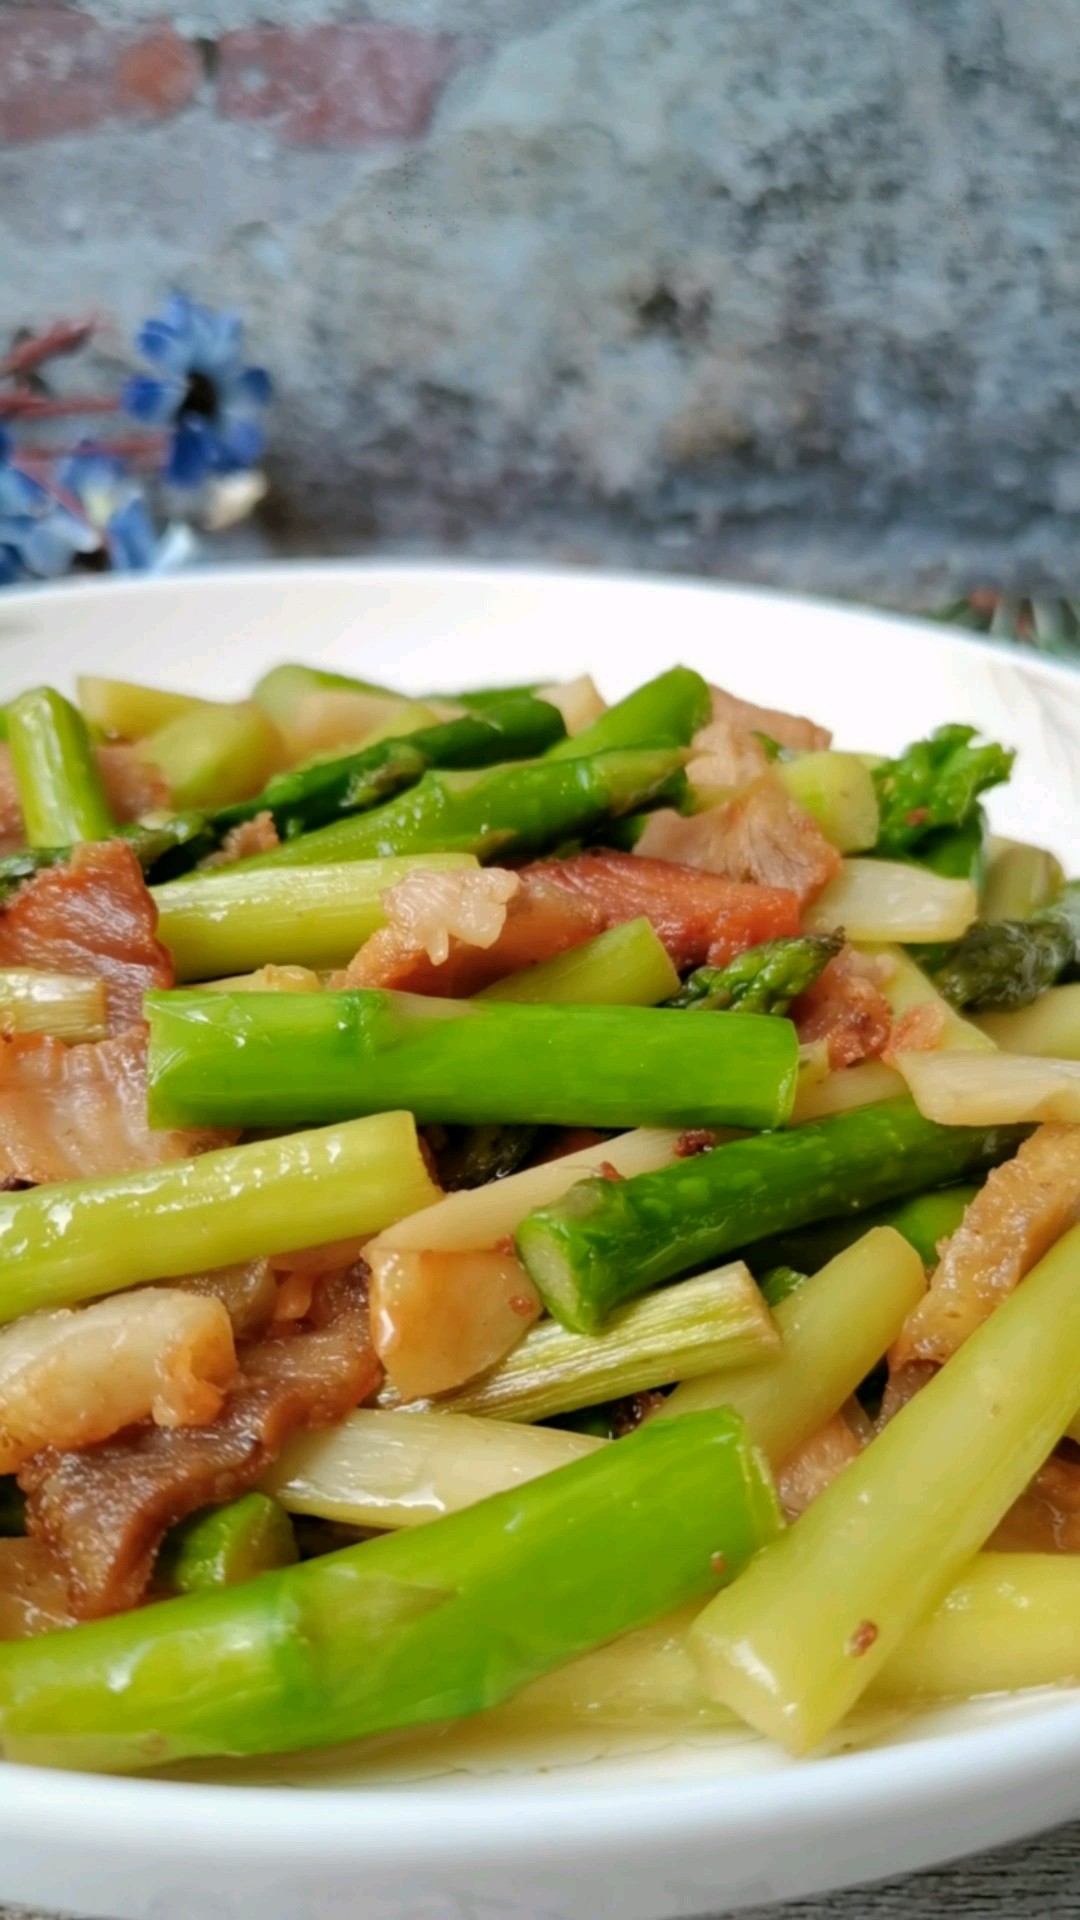 Stir-fried Pork with Green Asparagus